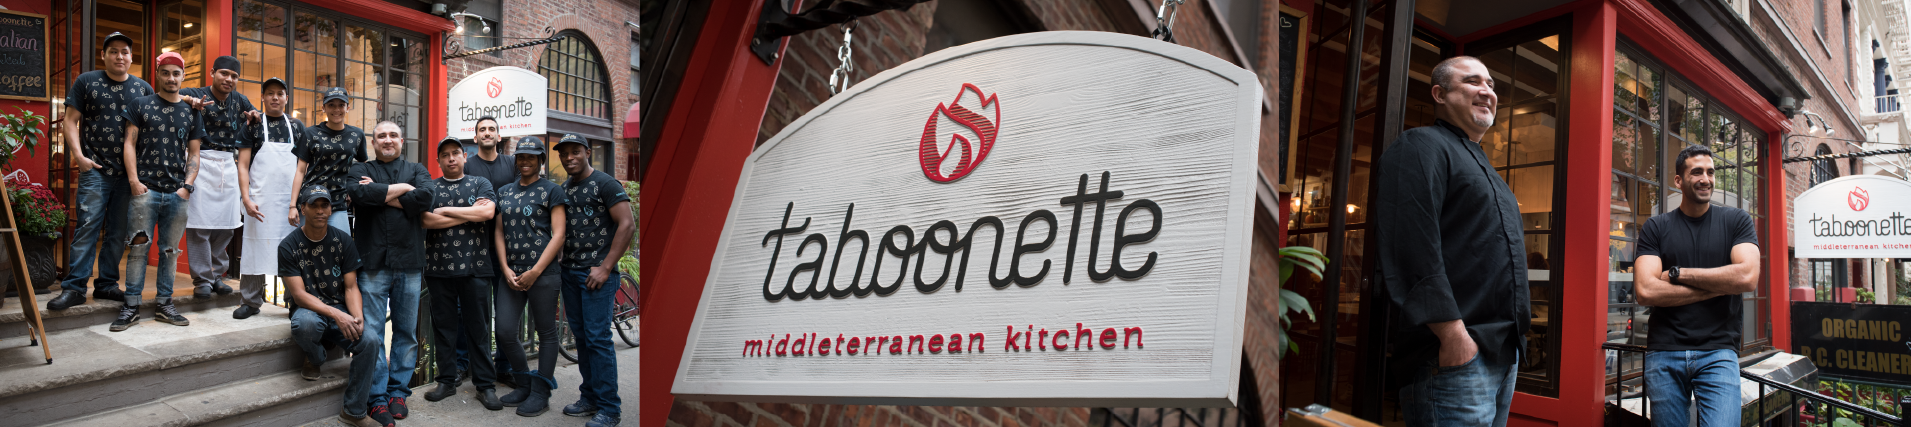 Taboonette Staff and restaurant